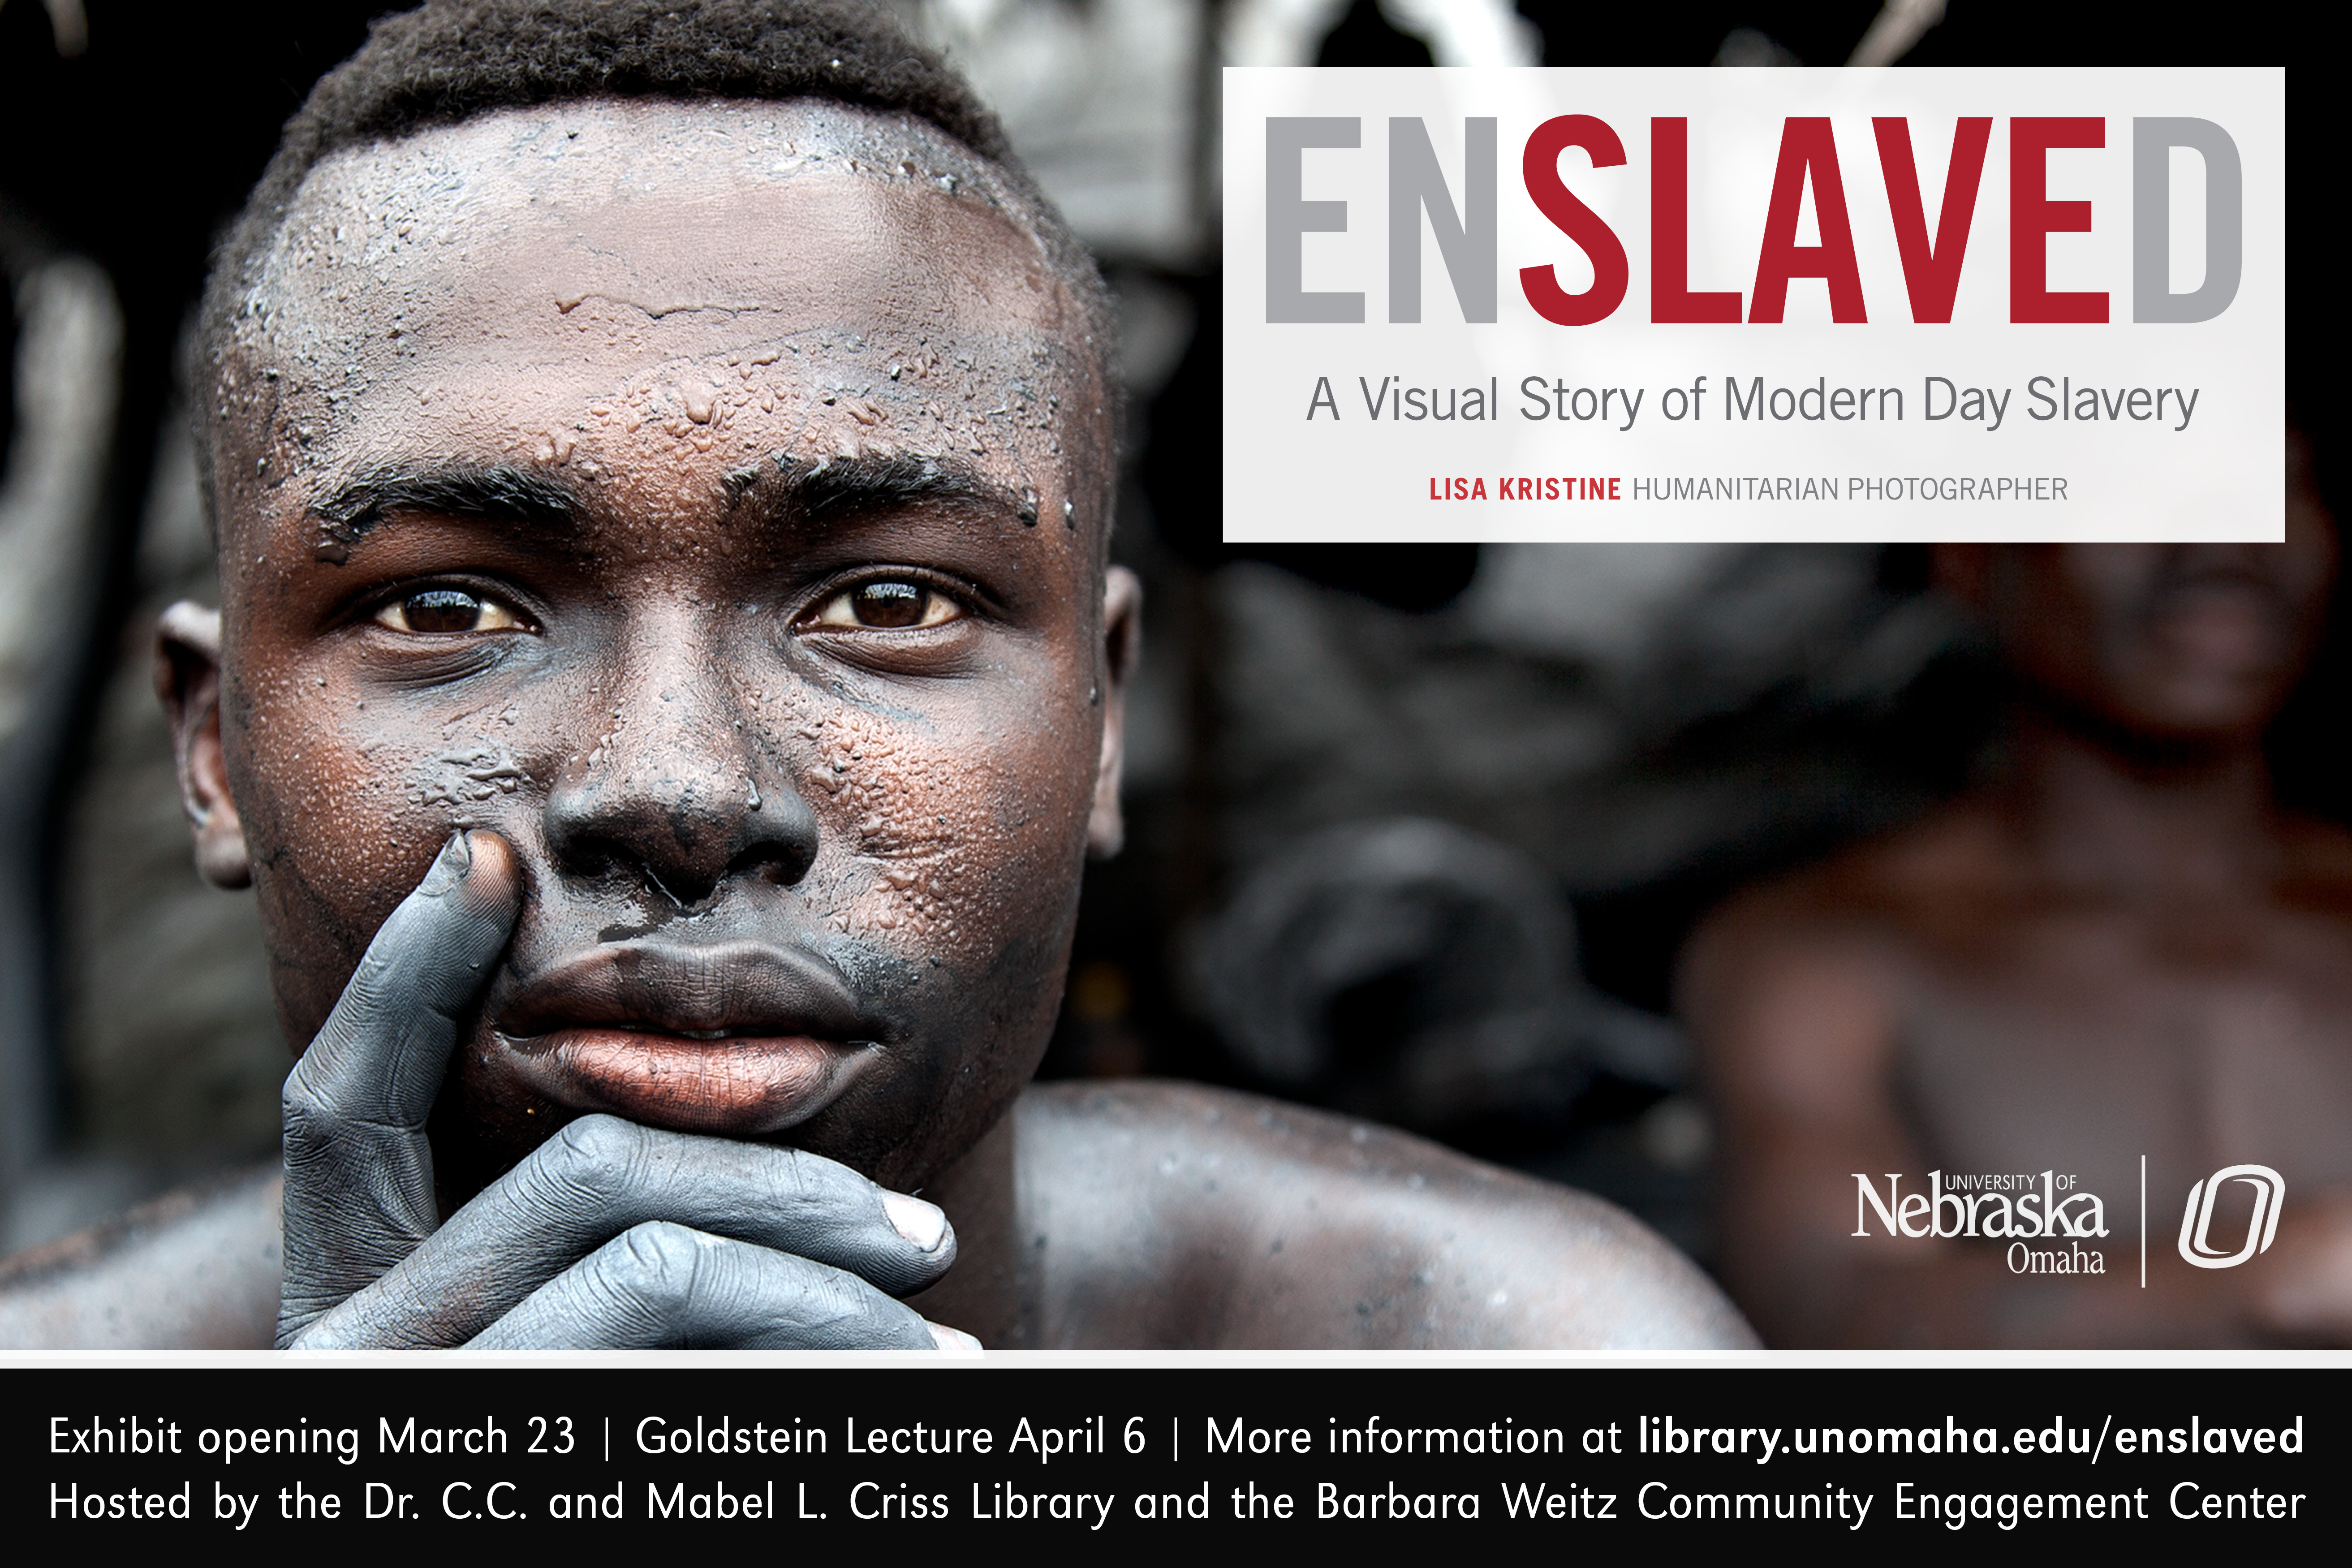 ENSLAVED: A Visual Story of Modern Day Slavery